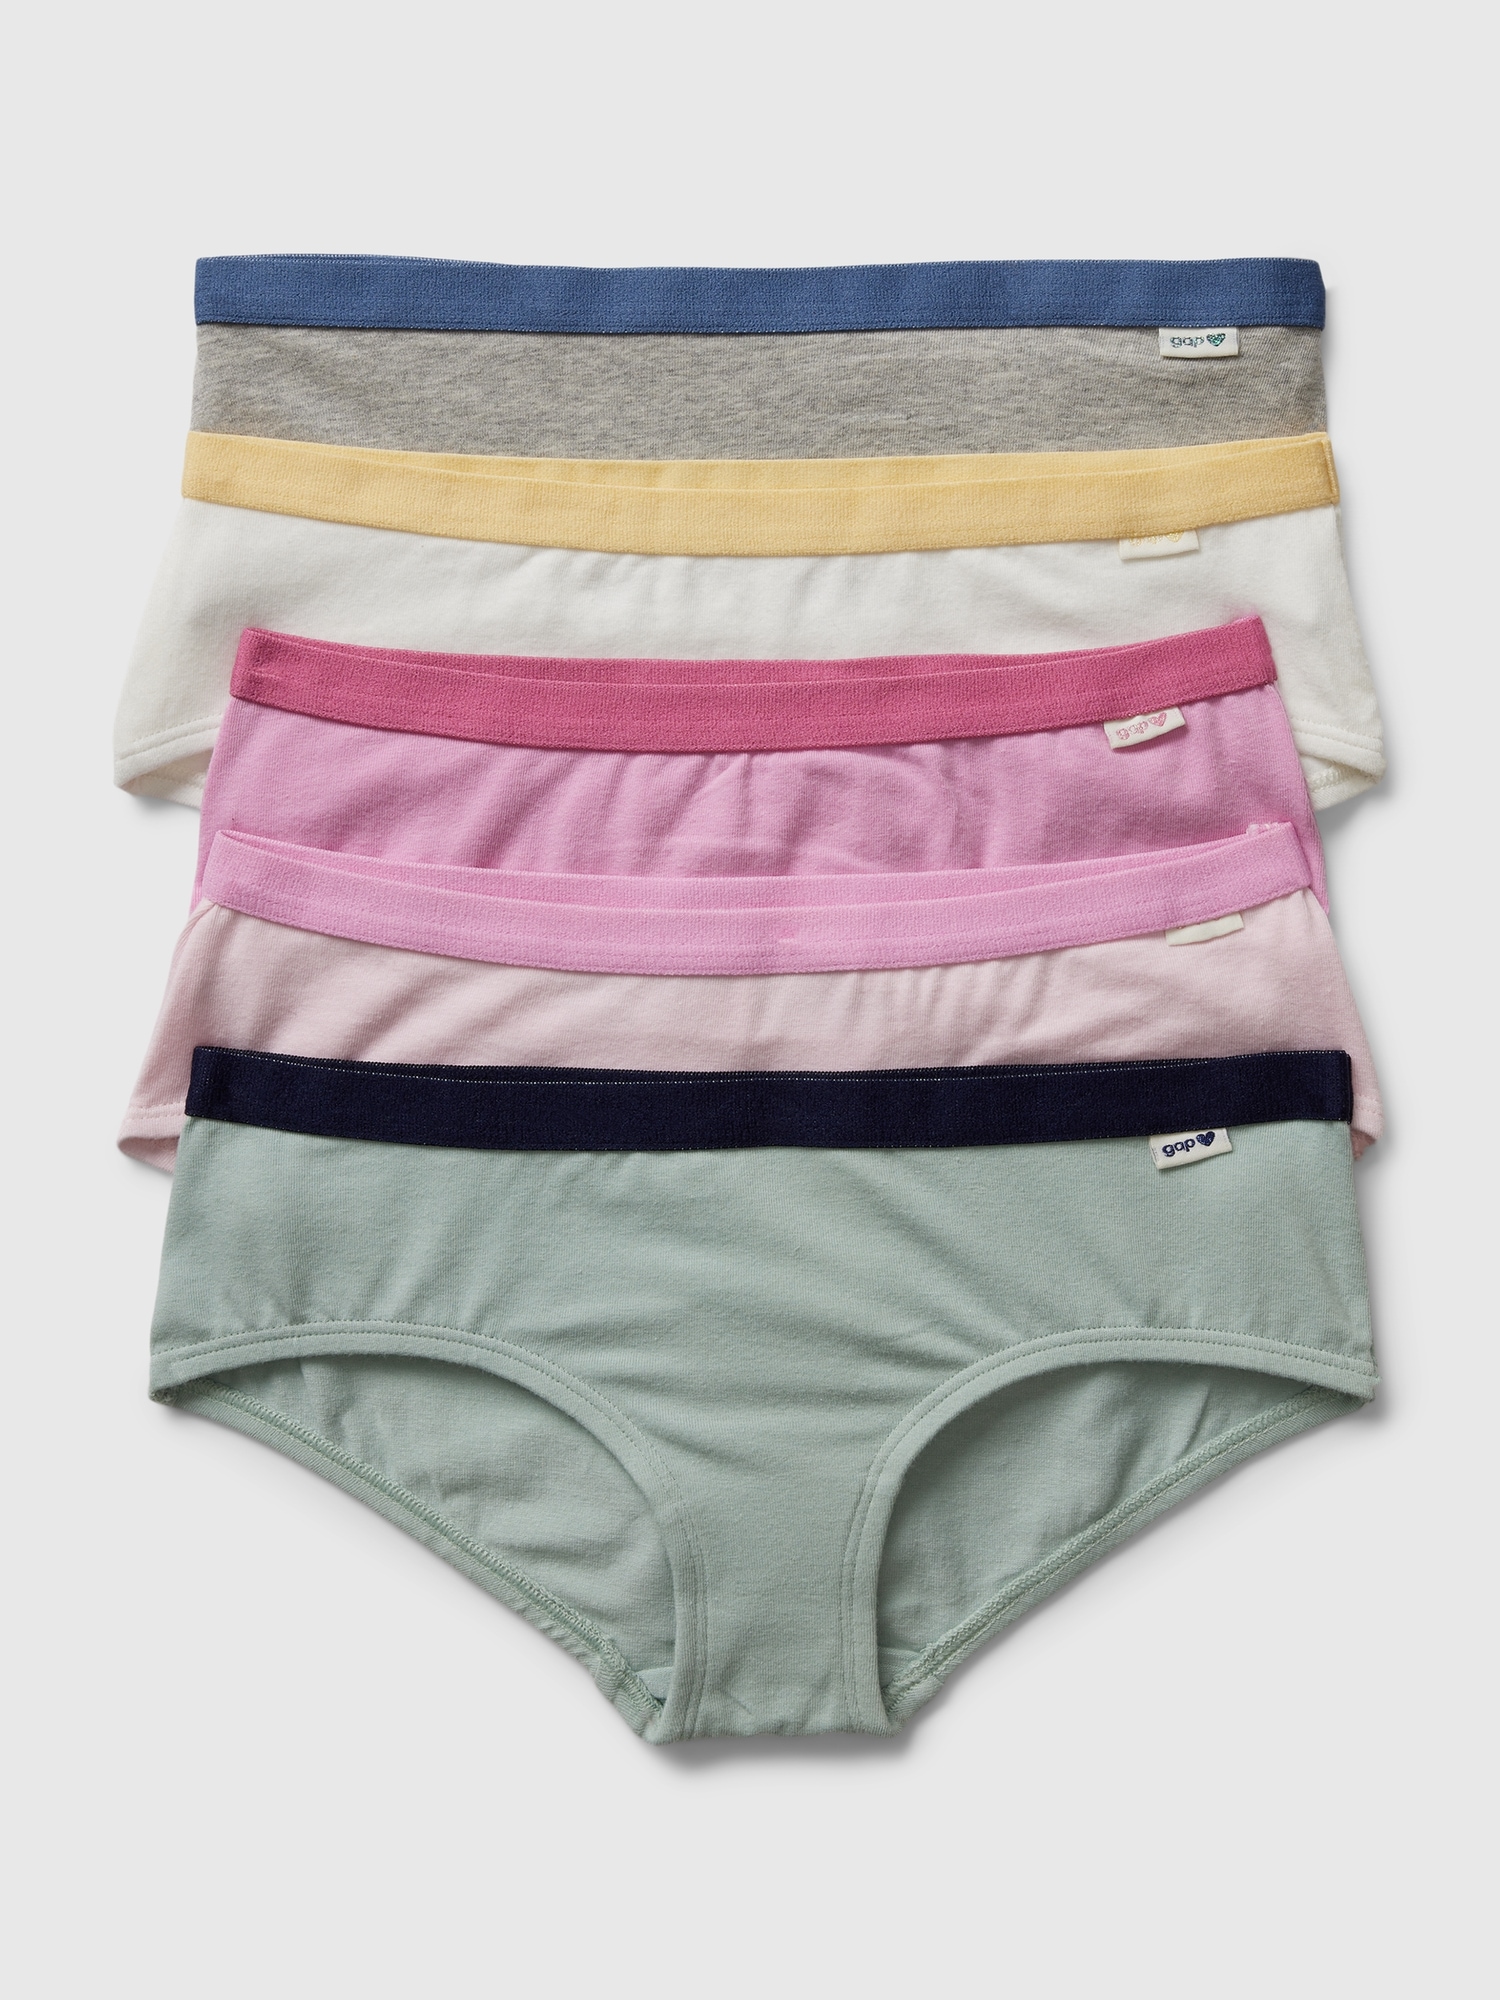 6 Packs Girls Cotton Underwear Briefs Kids Breathable Panties 2T